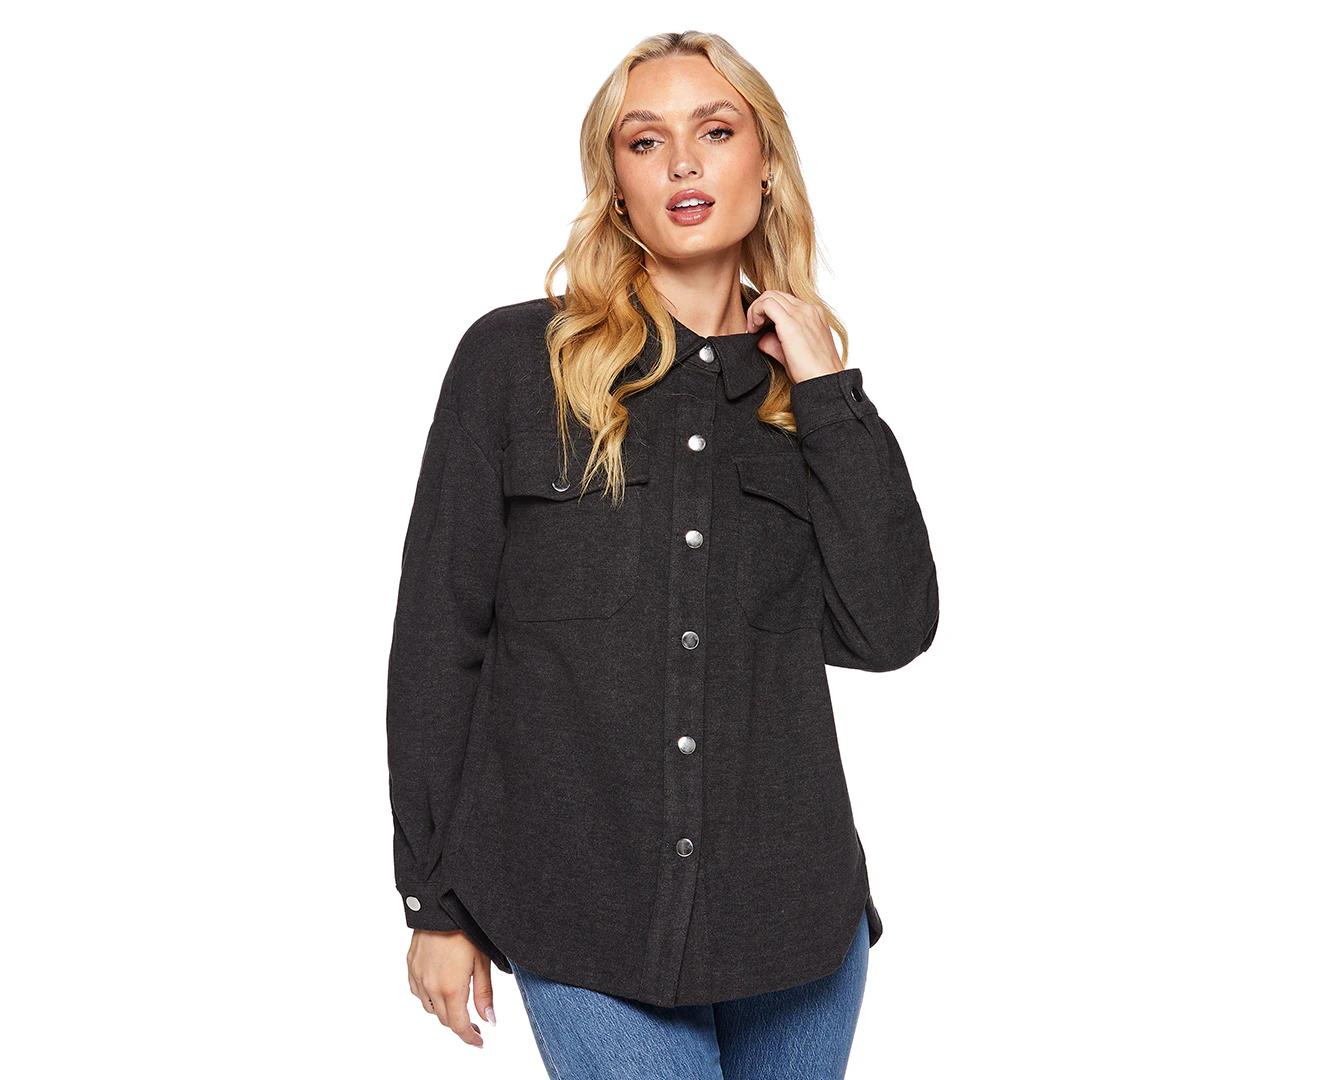 Shop Women's Coats and Jackets Online!